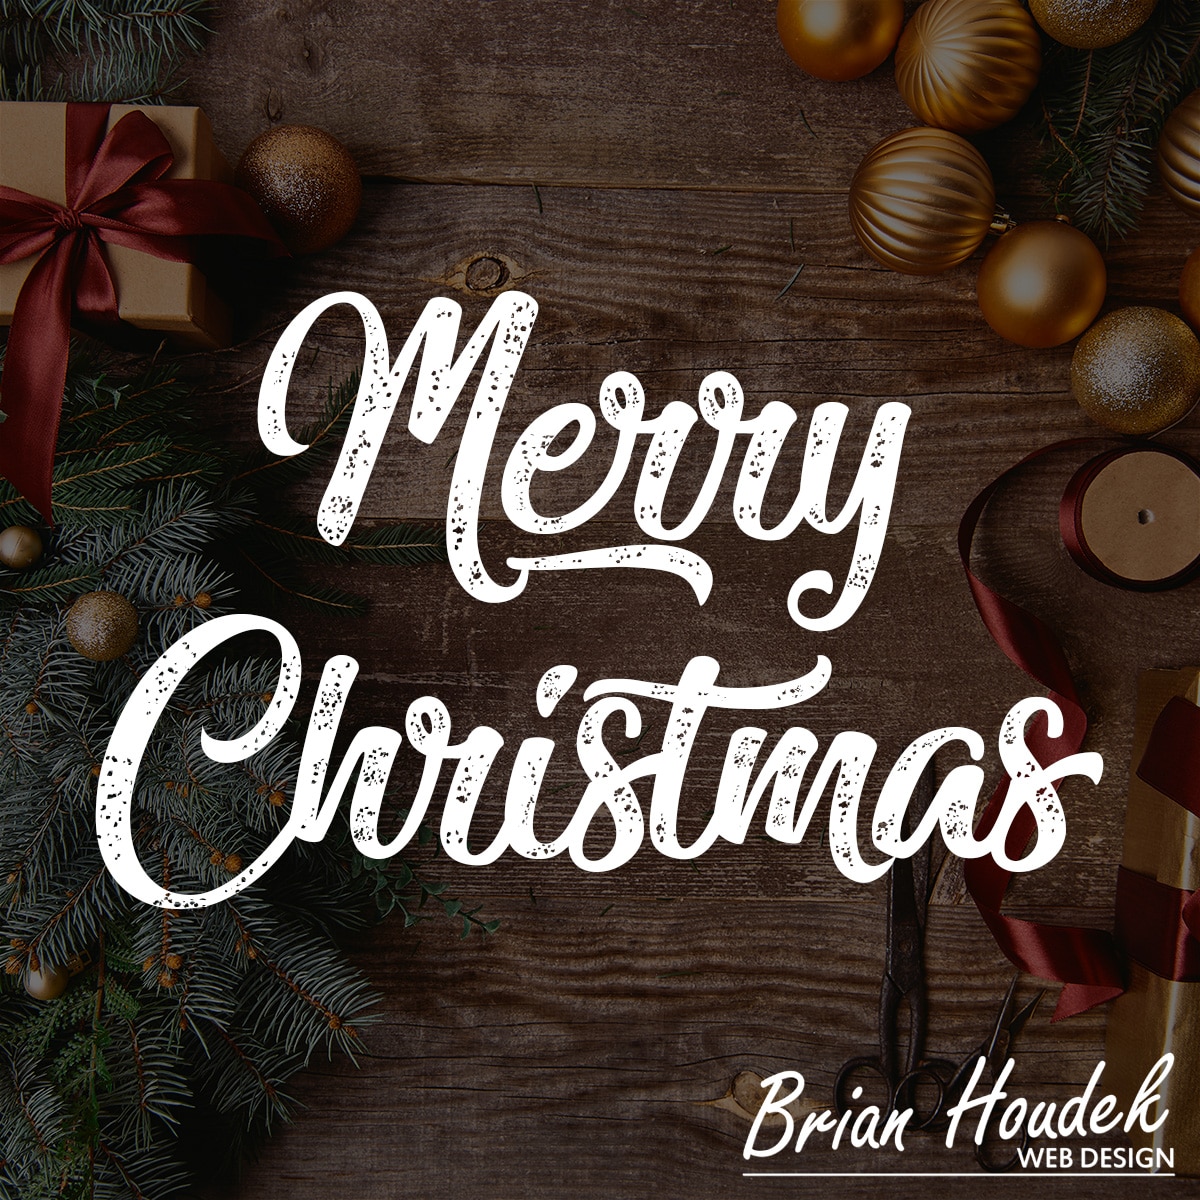 Merry Christmas from Brian Houdek Web Design